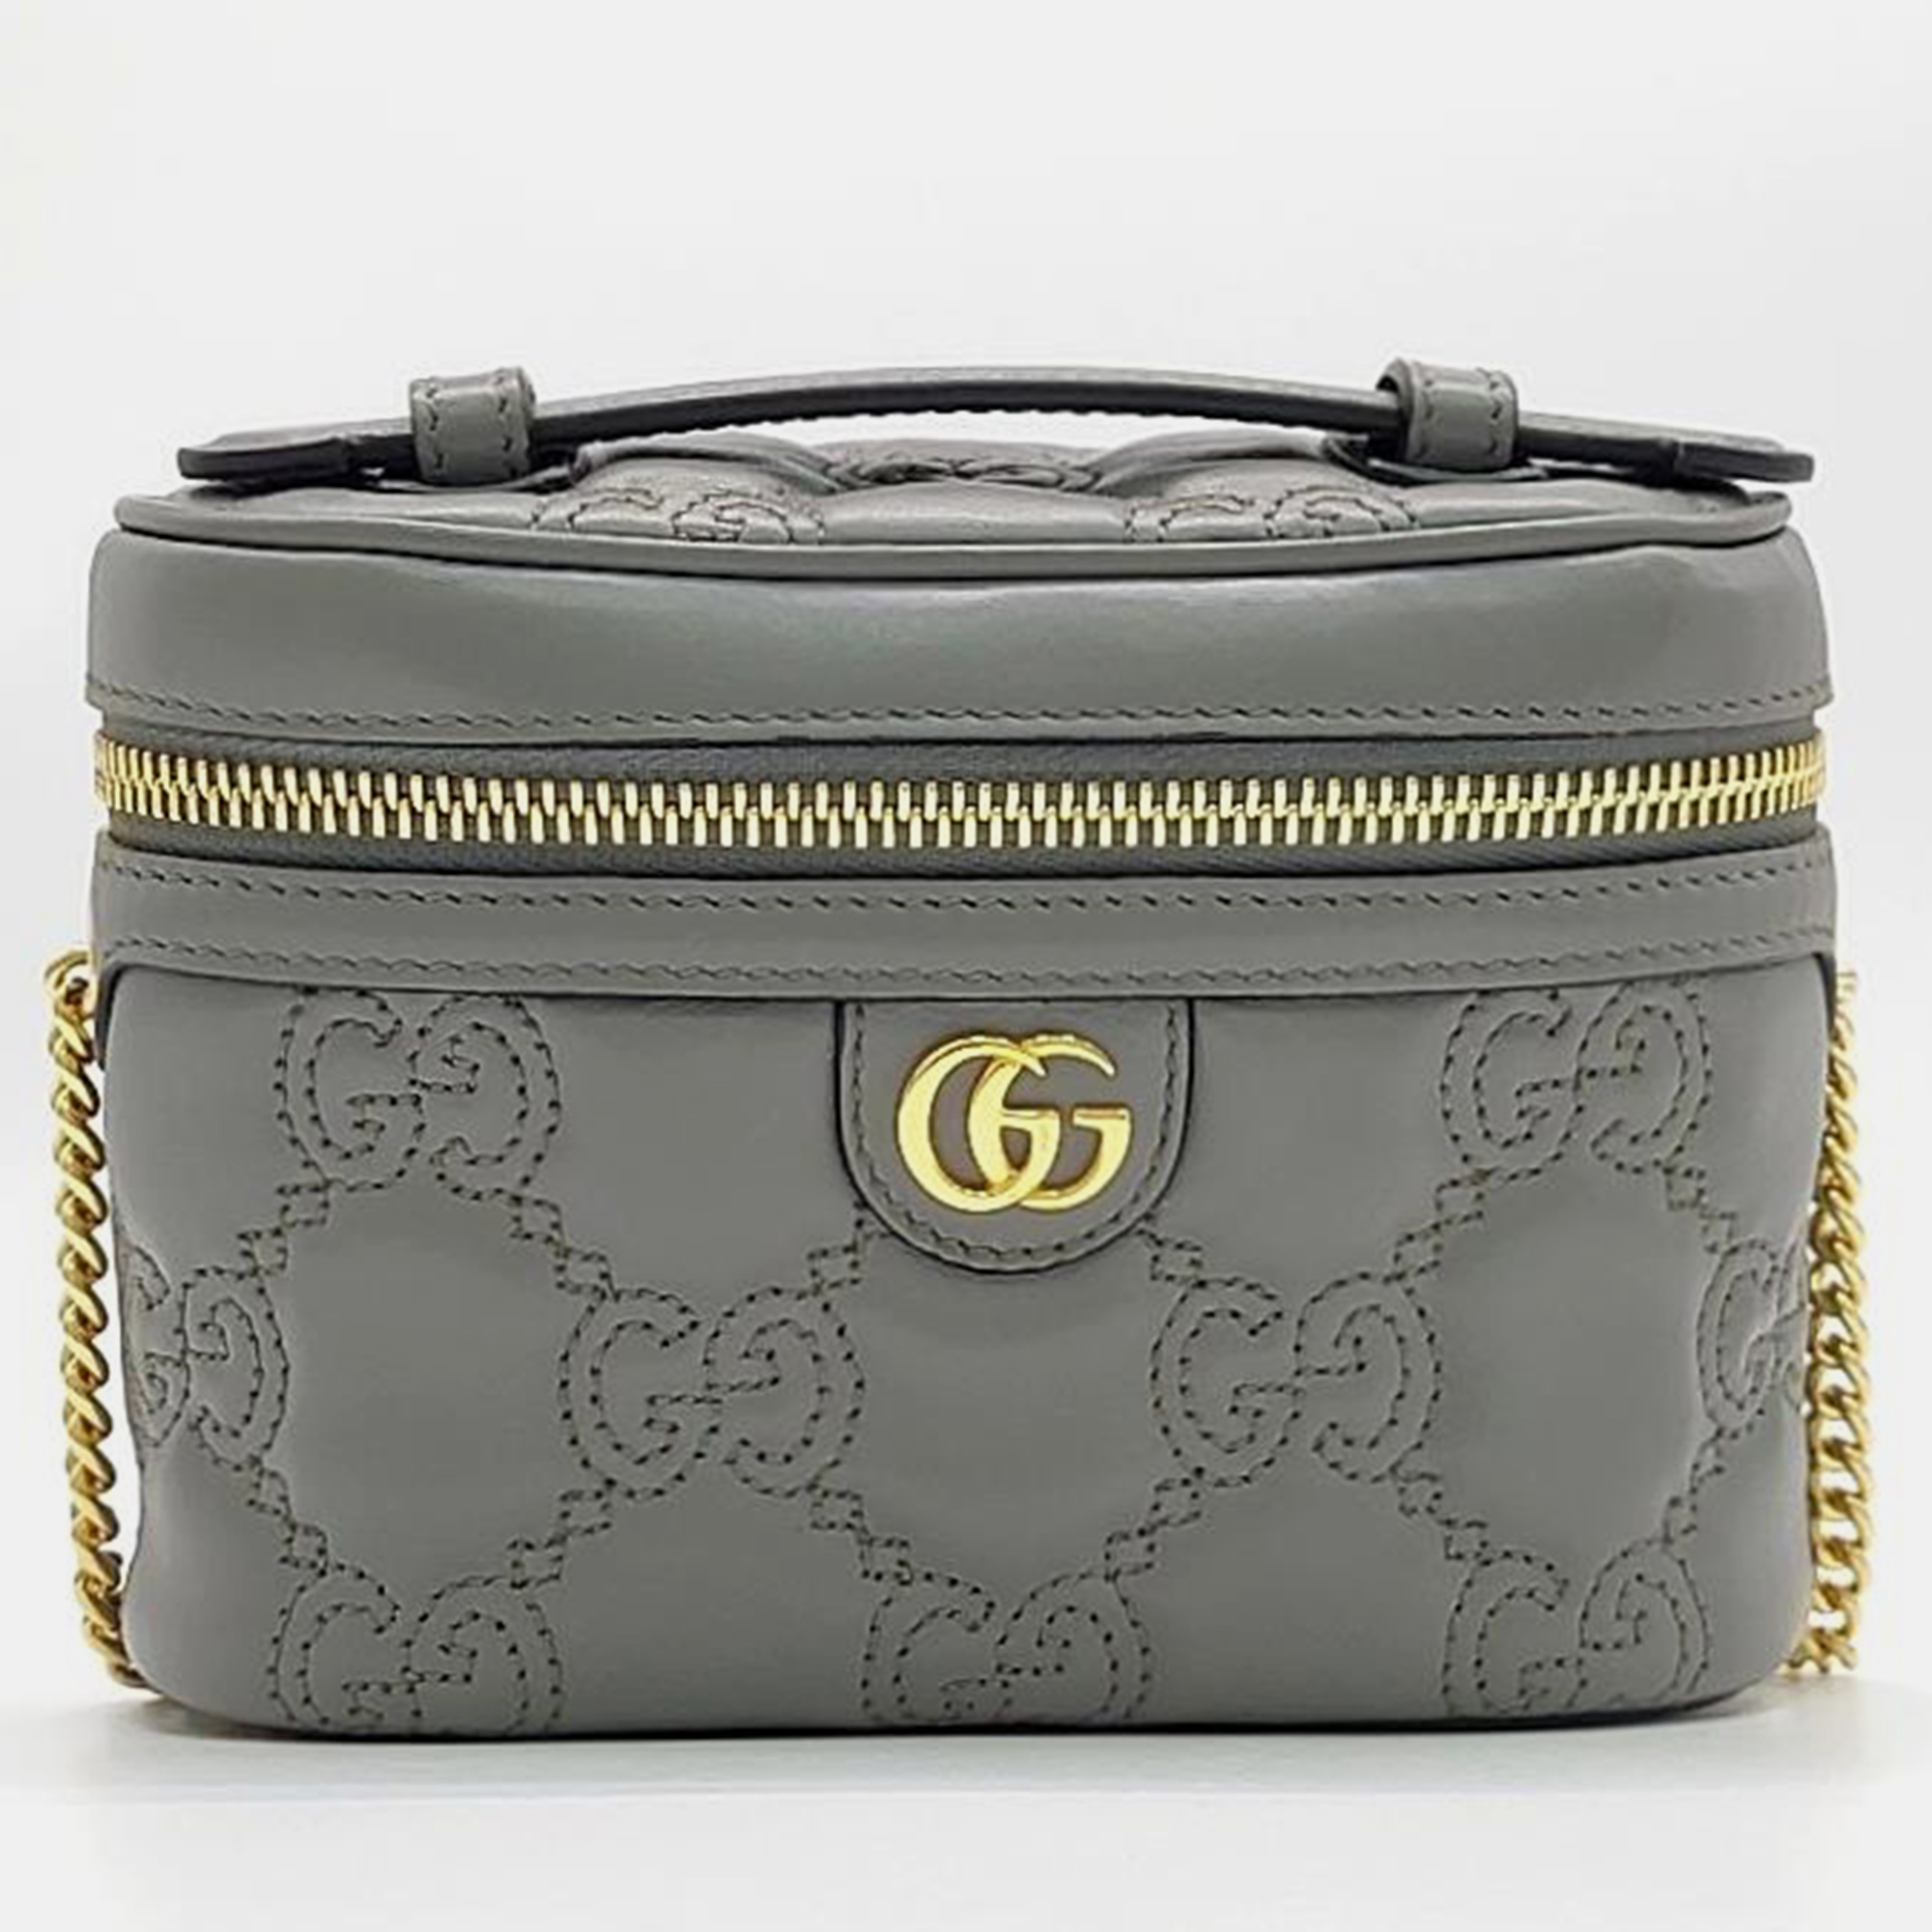 Gucci gray leather gg mini top handle bag